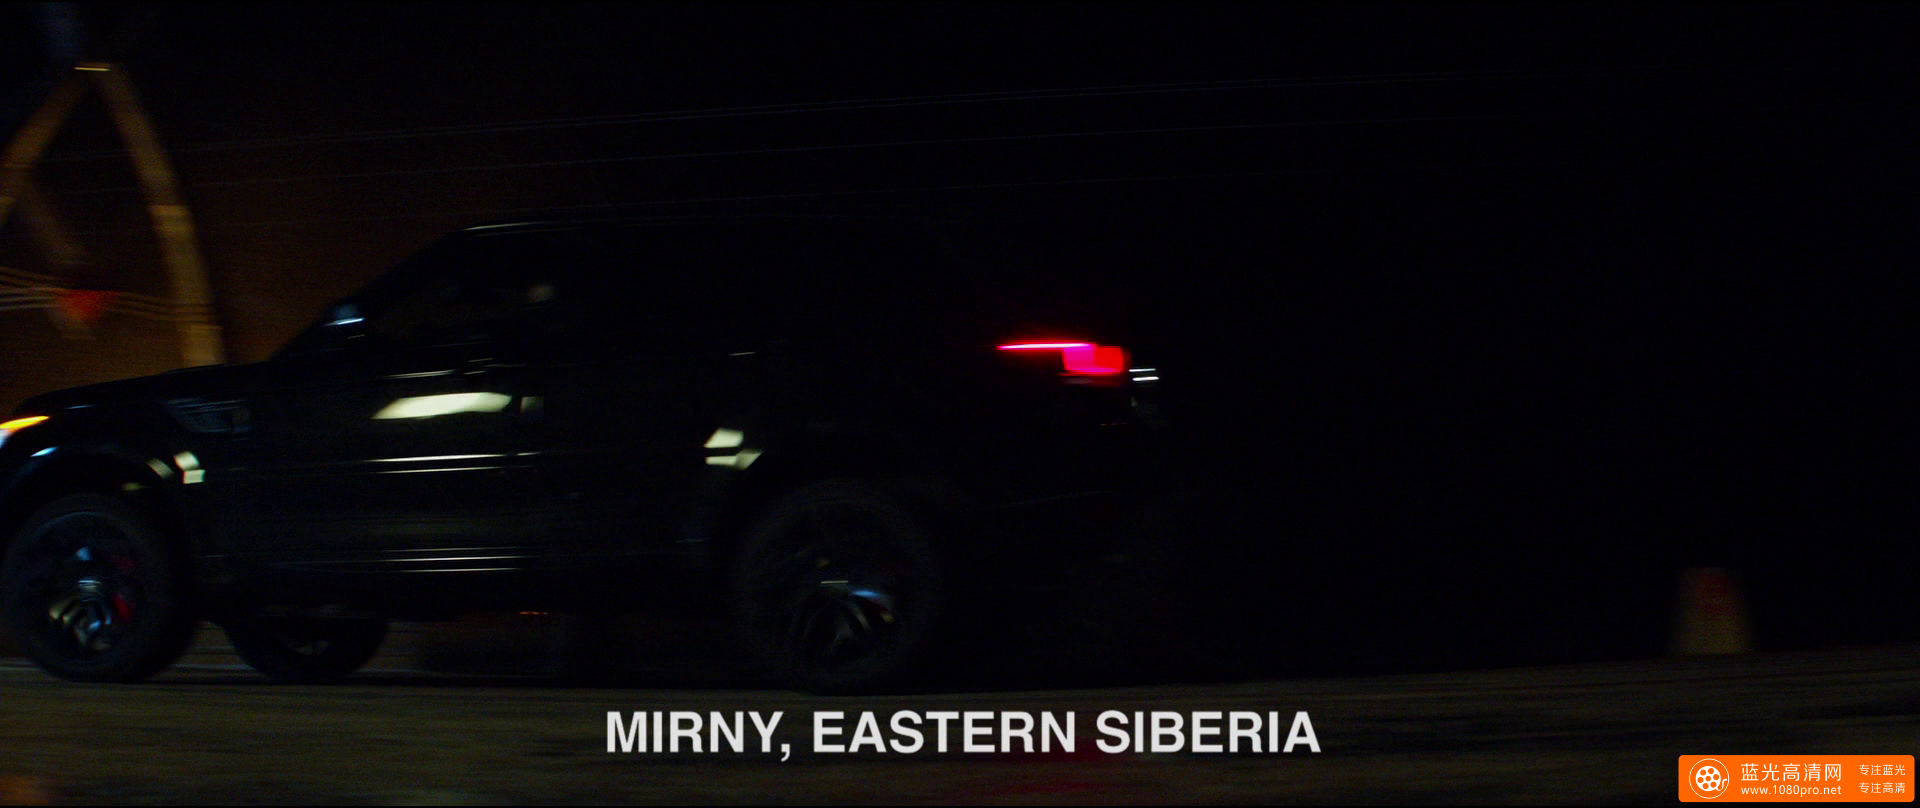 西伯利亚/冰血殺機 Siberia.2018.1080p.BluRay.x264.DTS-HD.MA.5.1-FGT 8.90GB